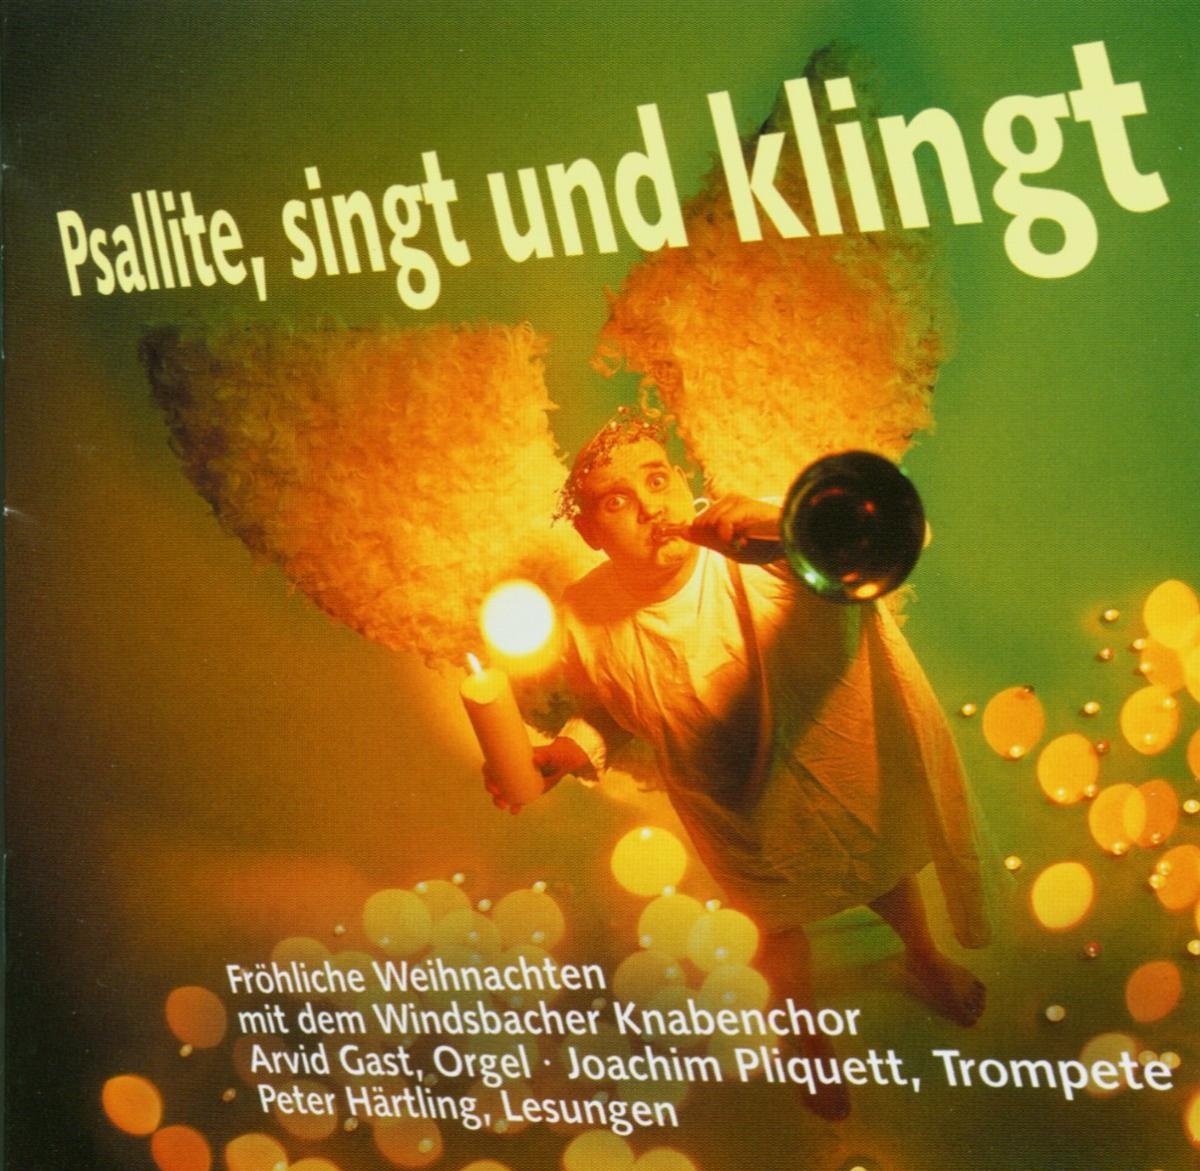 Psallite Singt Und Klingt - Windsbacher Knabenchor  Beringer  Duo Pliq. (CD)